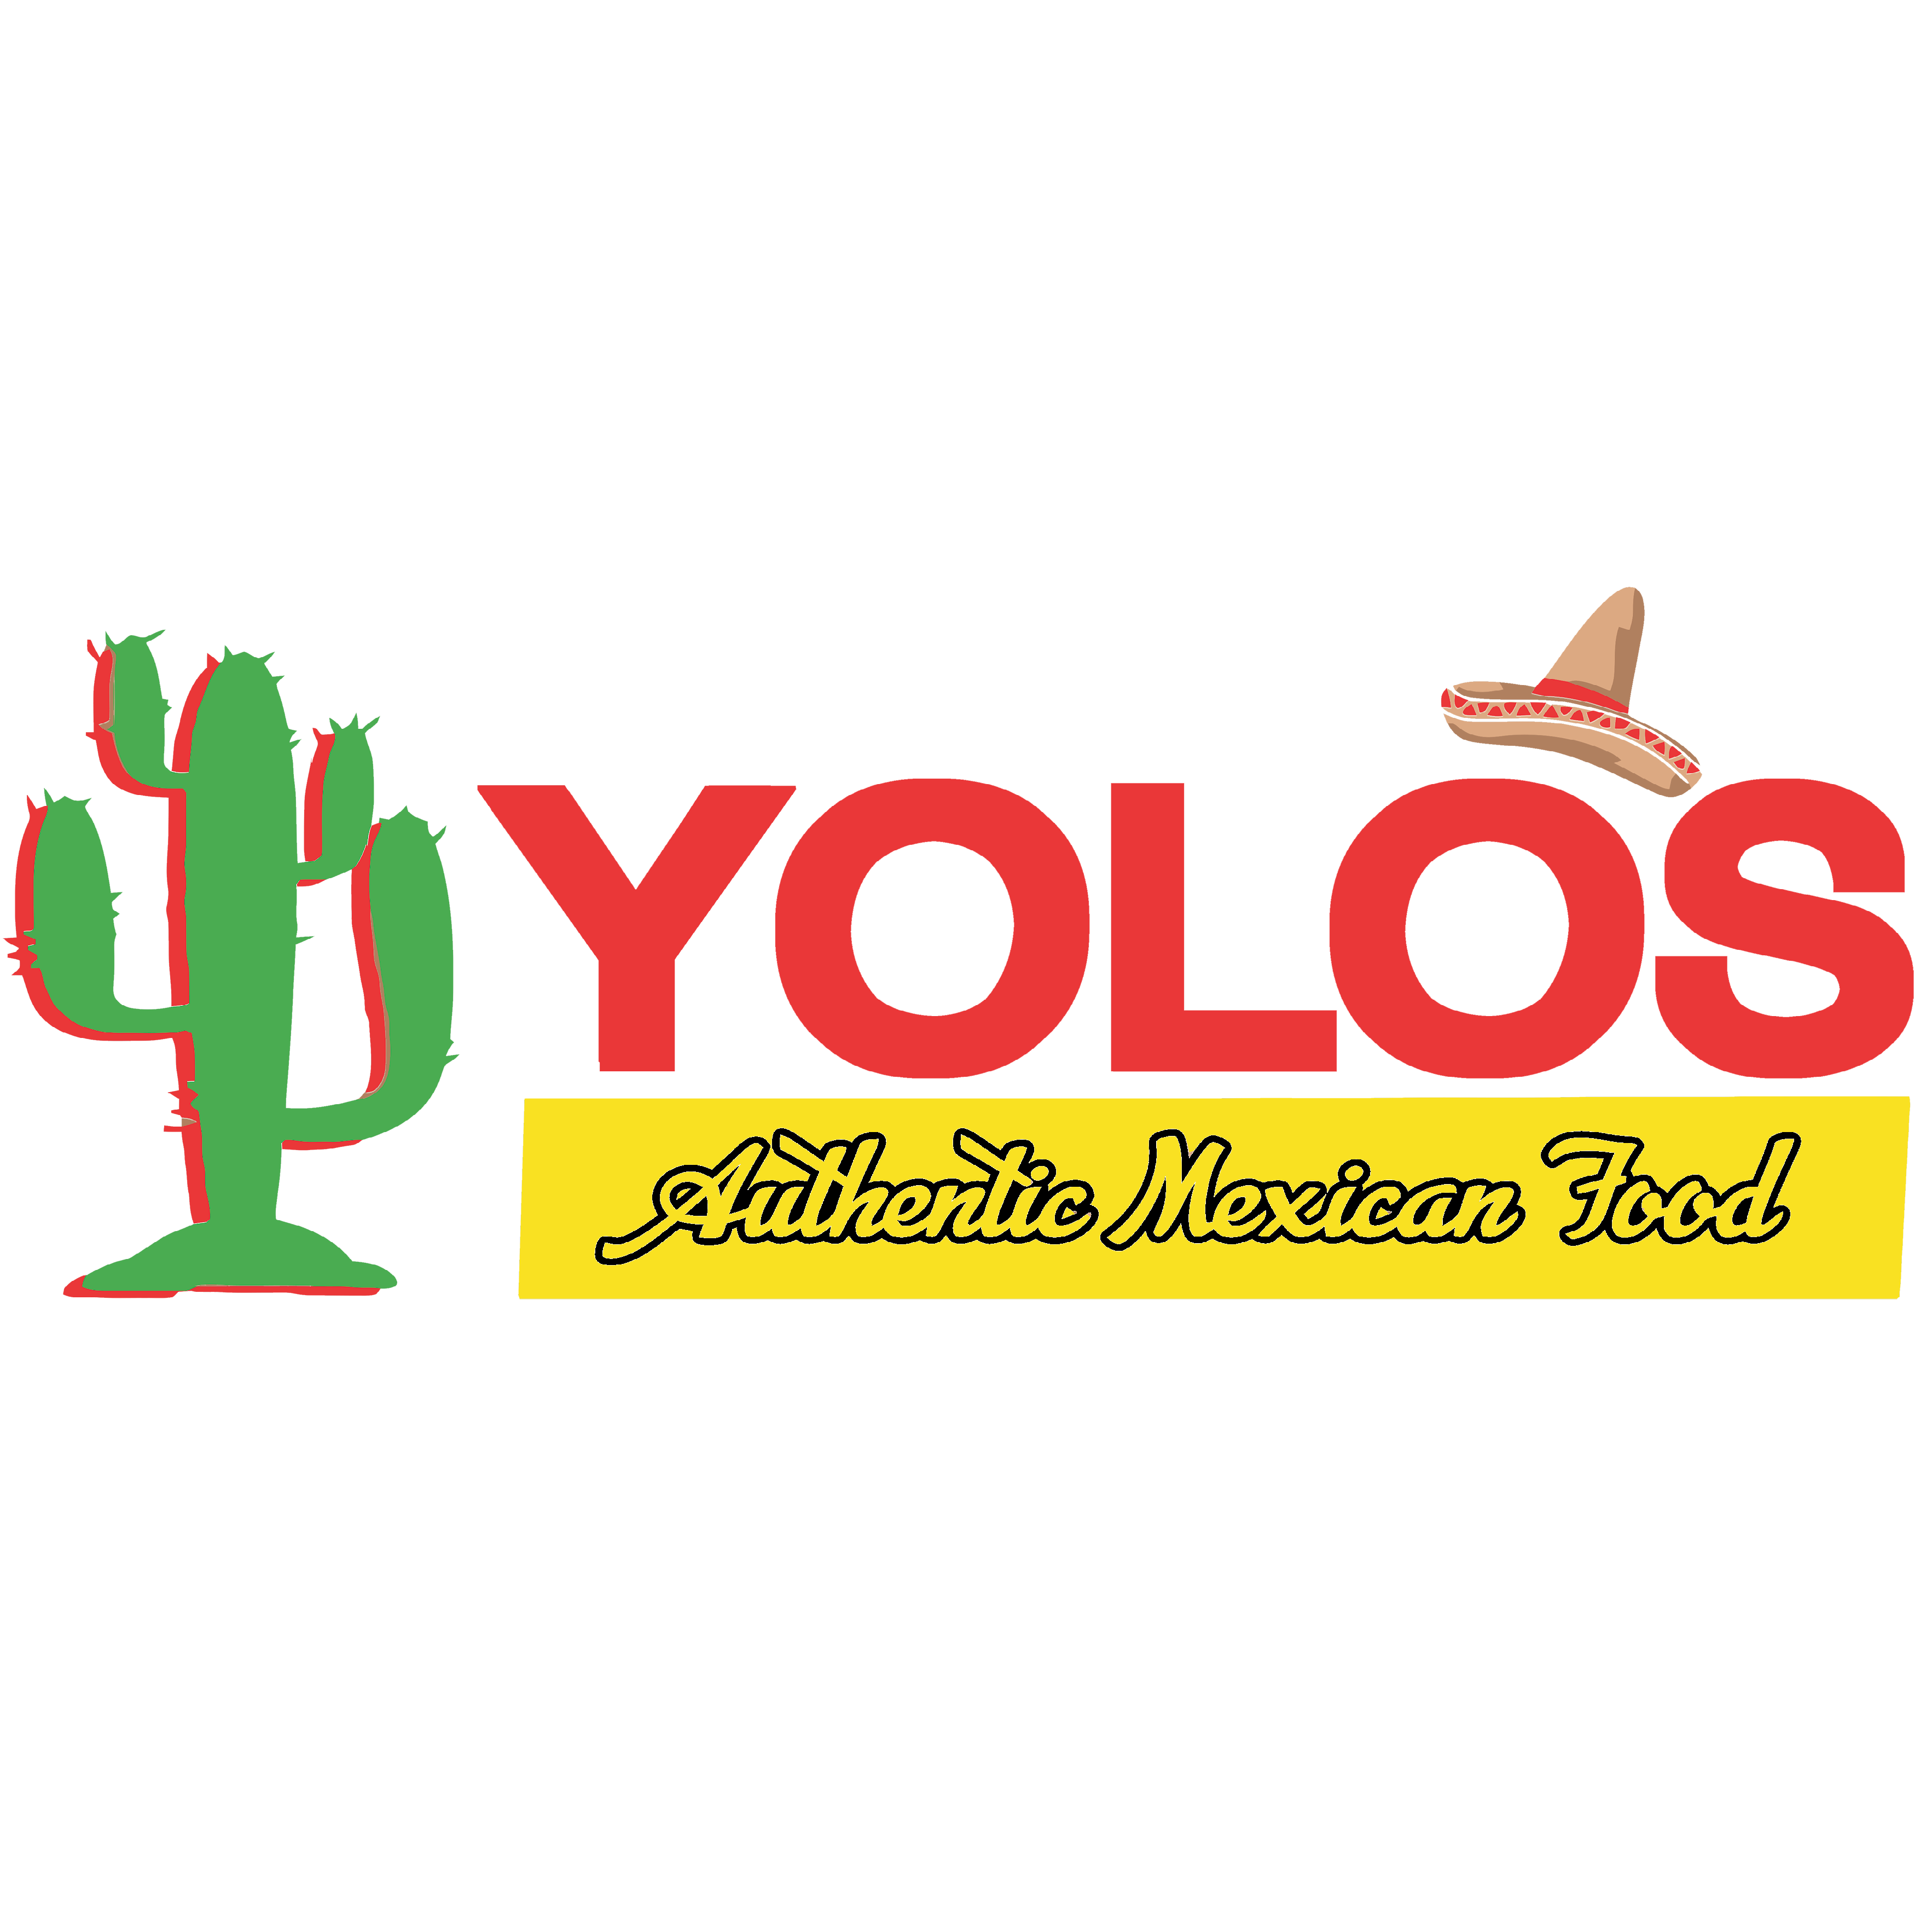 Yolo's Authentic Mexican - Scottsdale, AZ 85262 - (480)868-0706 | ShowMeLocal.com